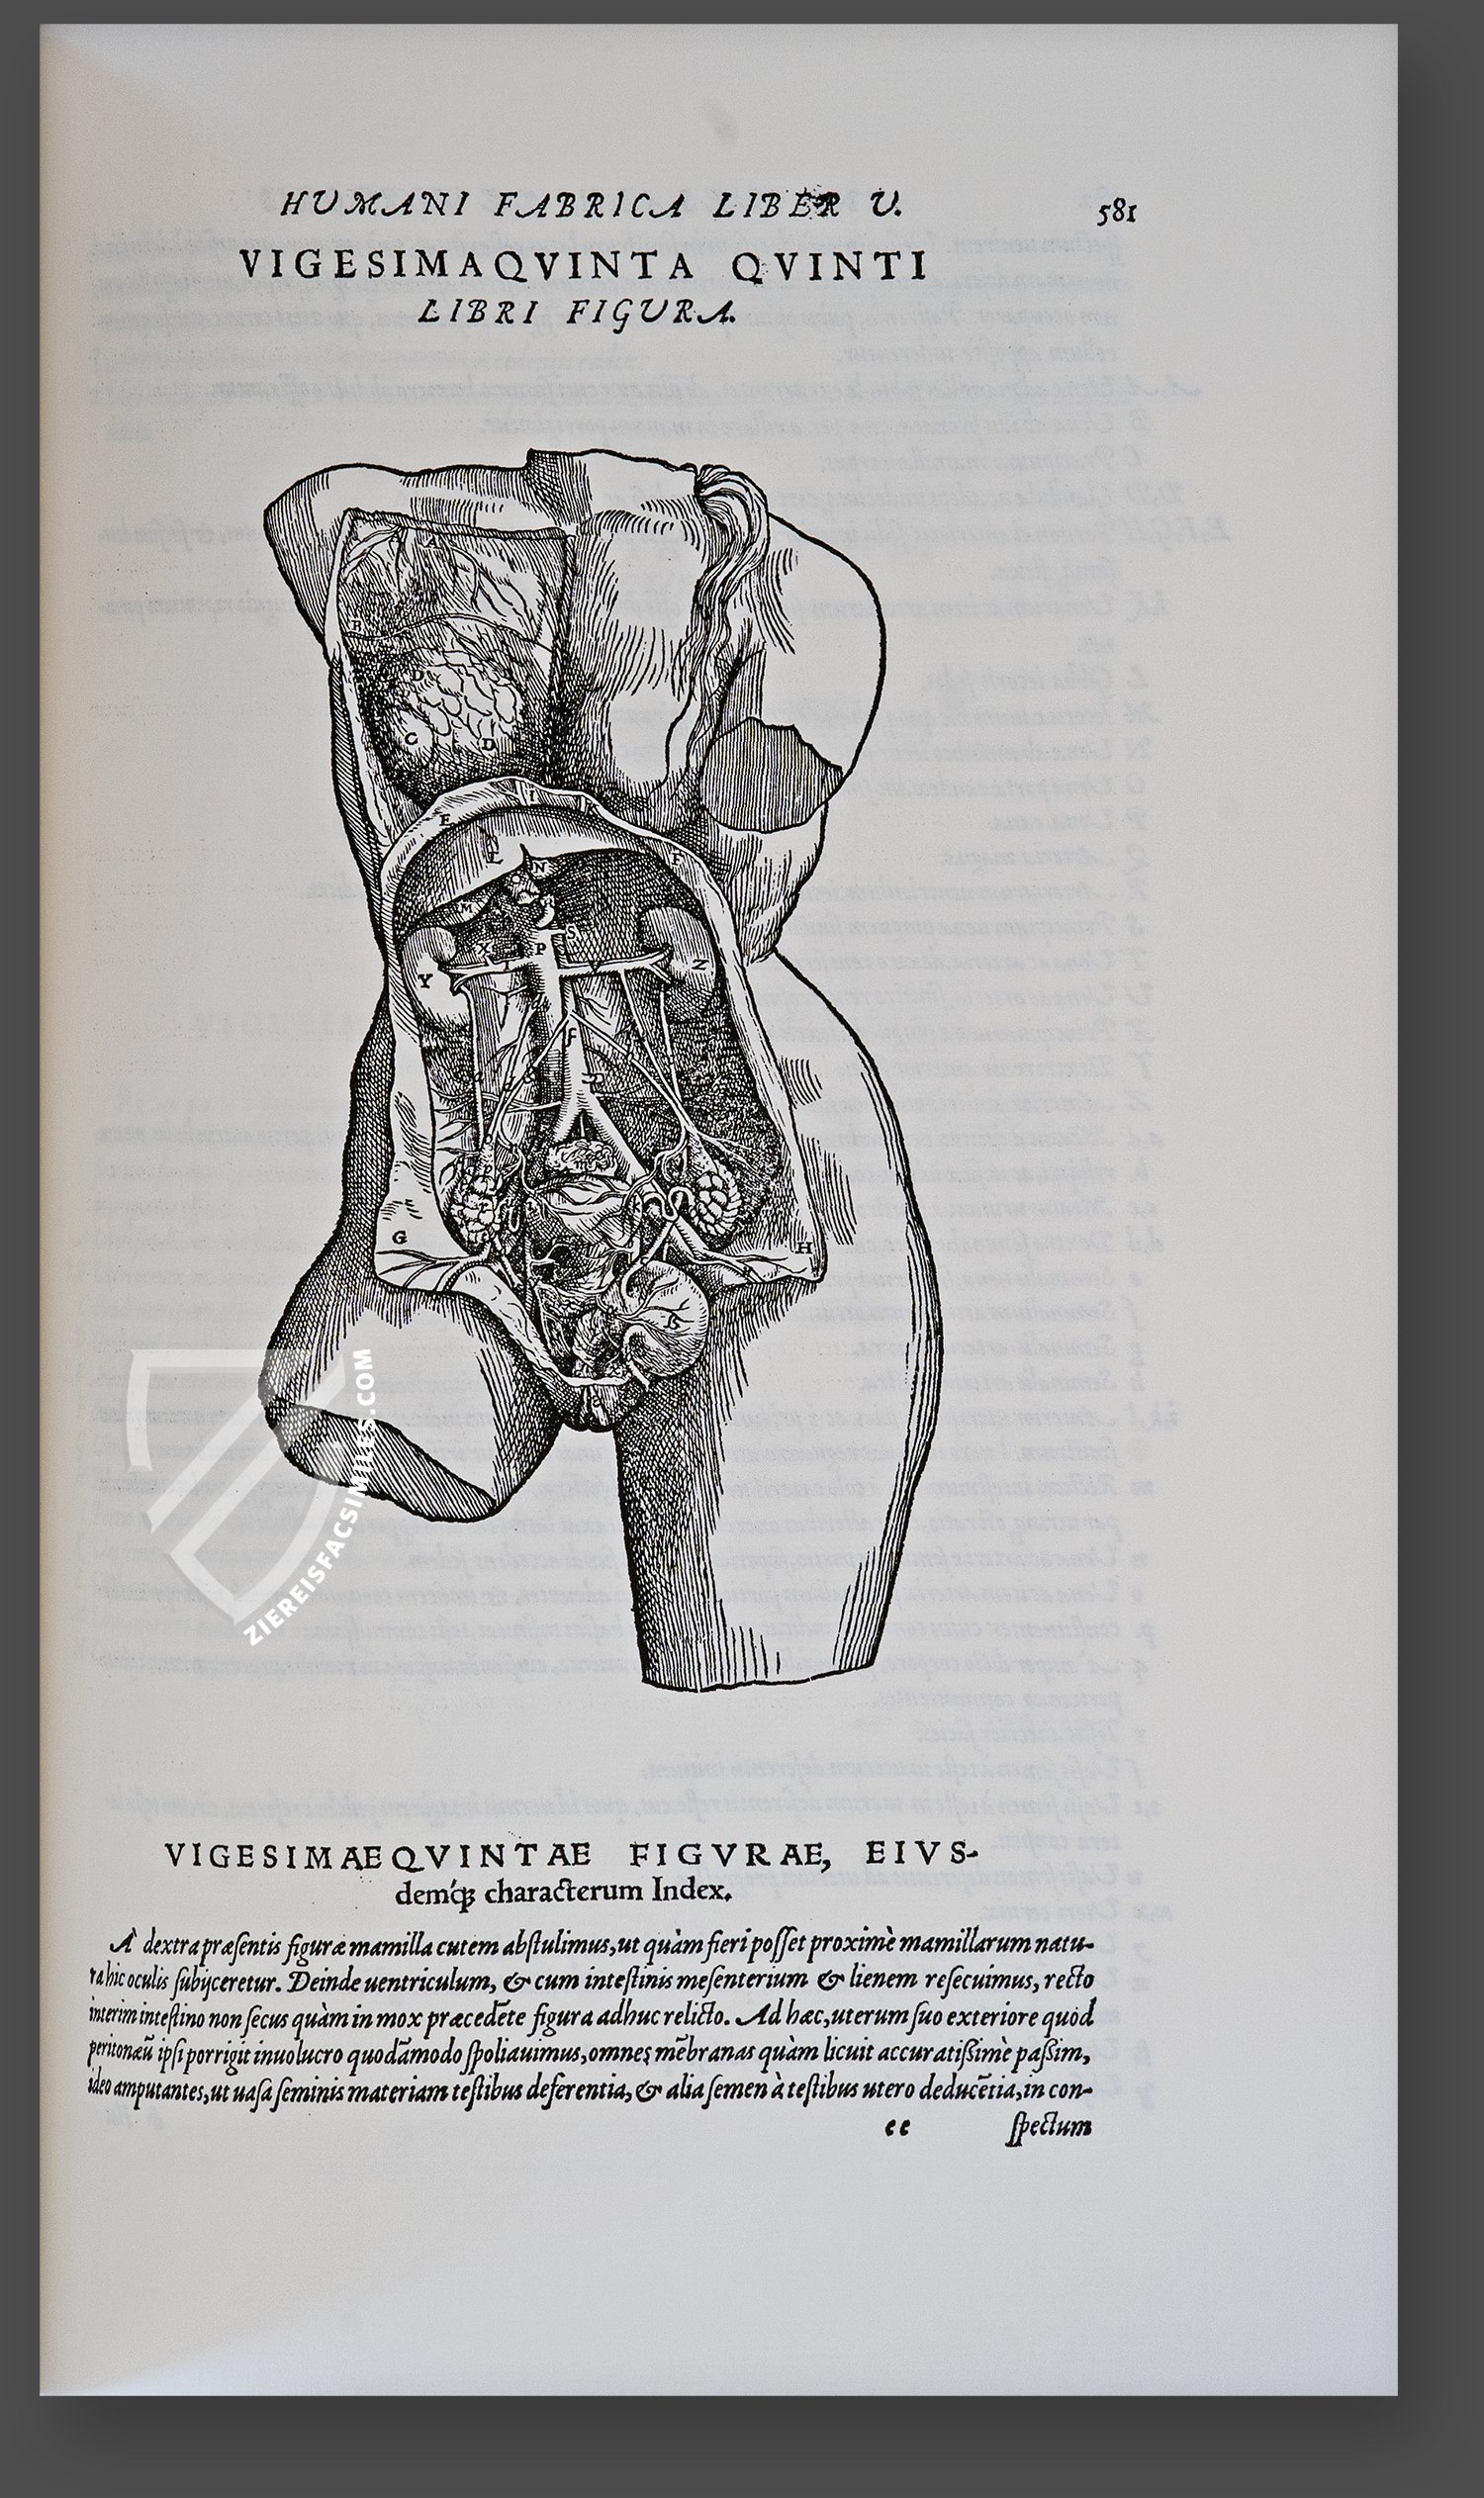 Vesalius – anatomy.edwardworthlibrary.ie ©